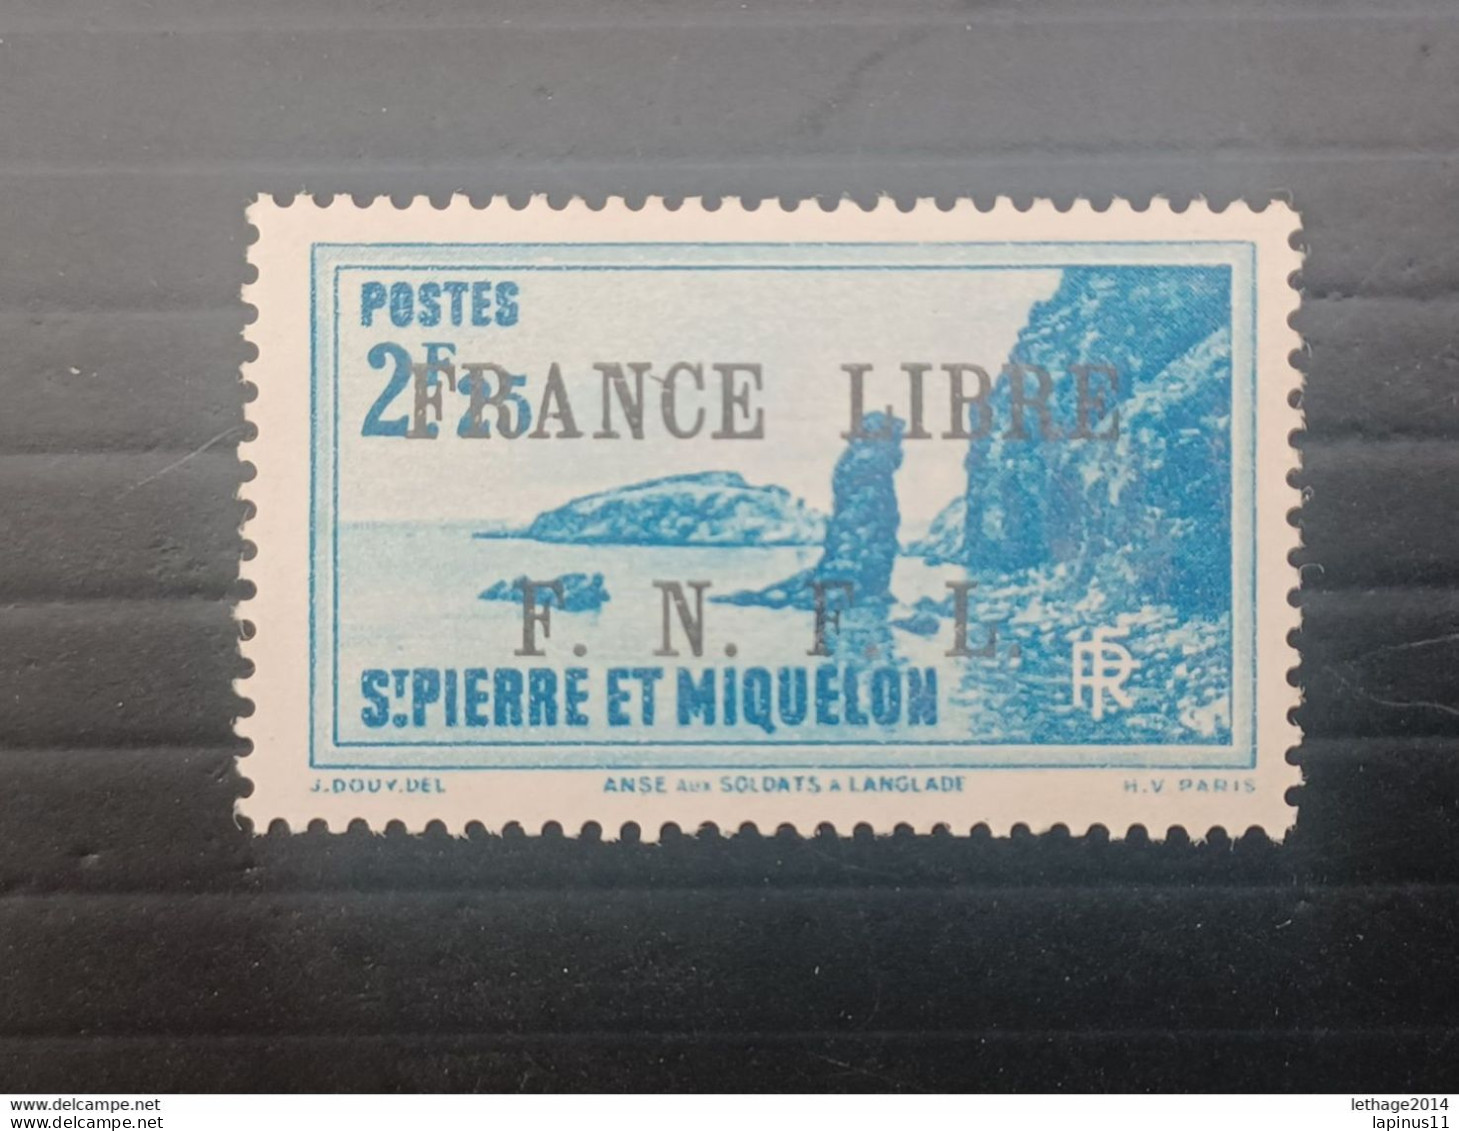 ST PIERRE ET MIQUELLON 1941 STAMPS OF 1922 OVERPRINT FRANCE LIBRE F N F L CAT. YVERT N. 269 MNG - Nuovi